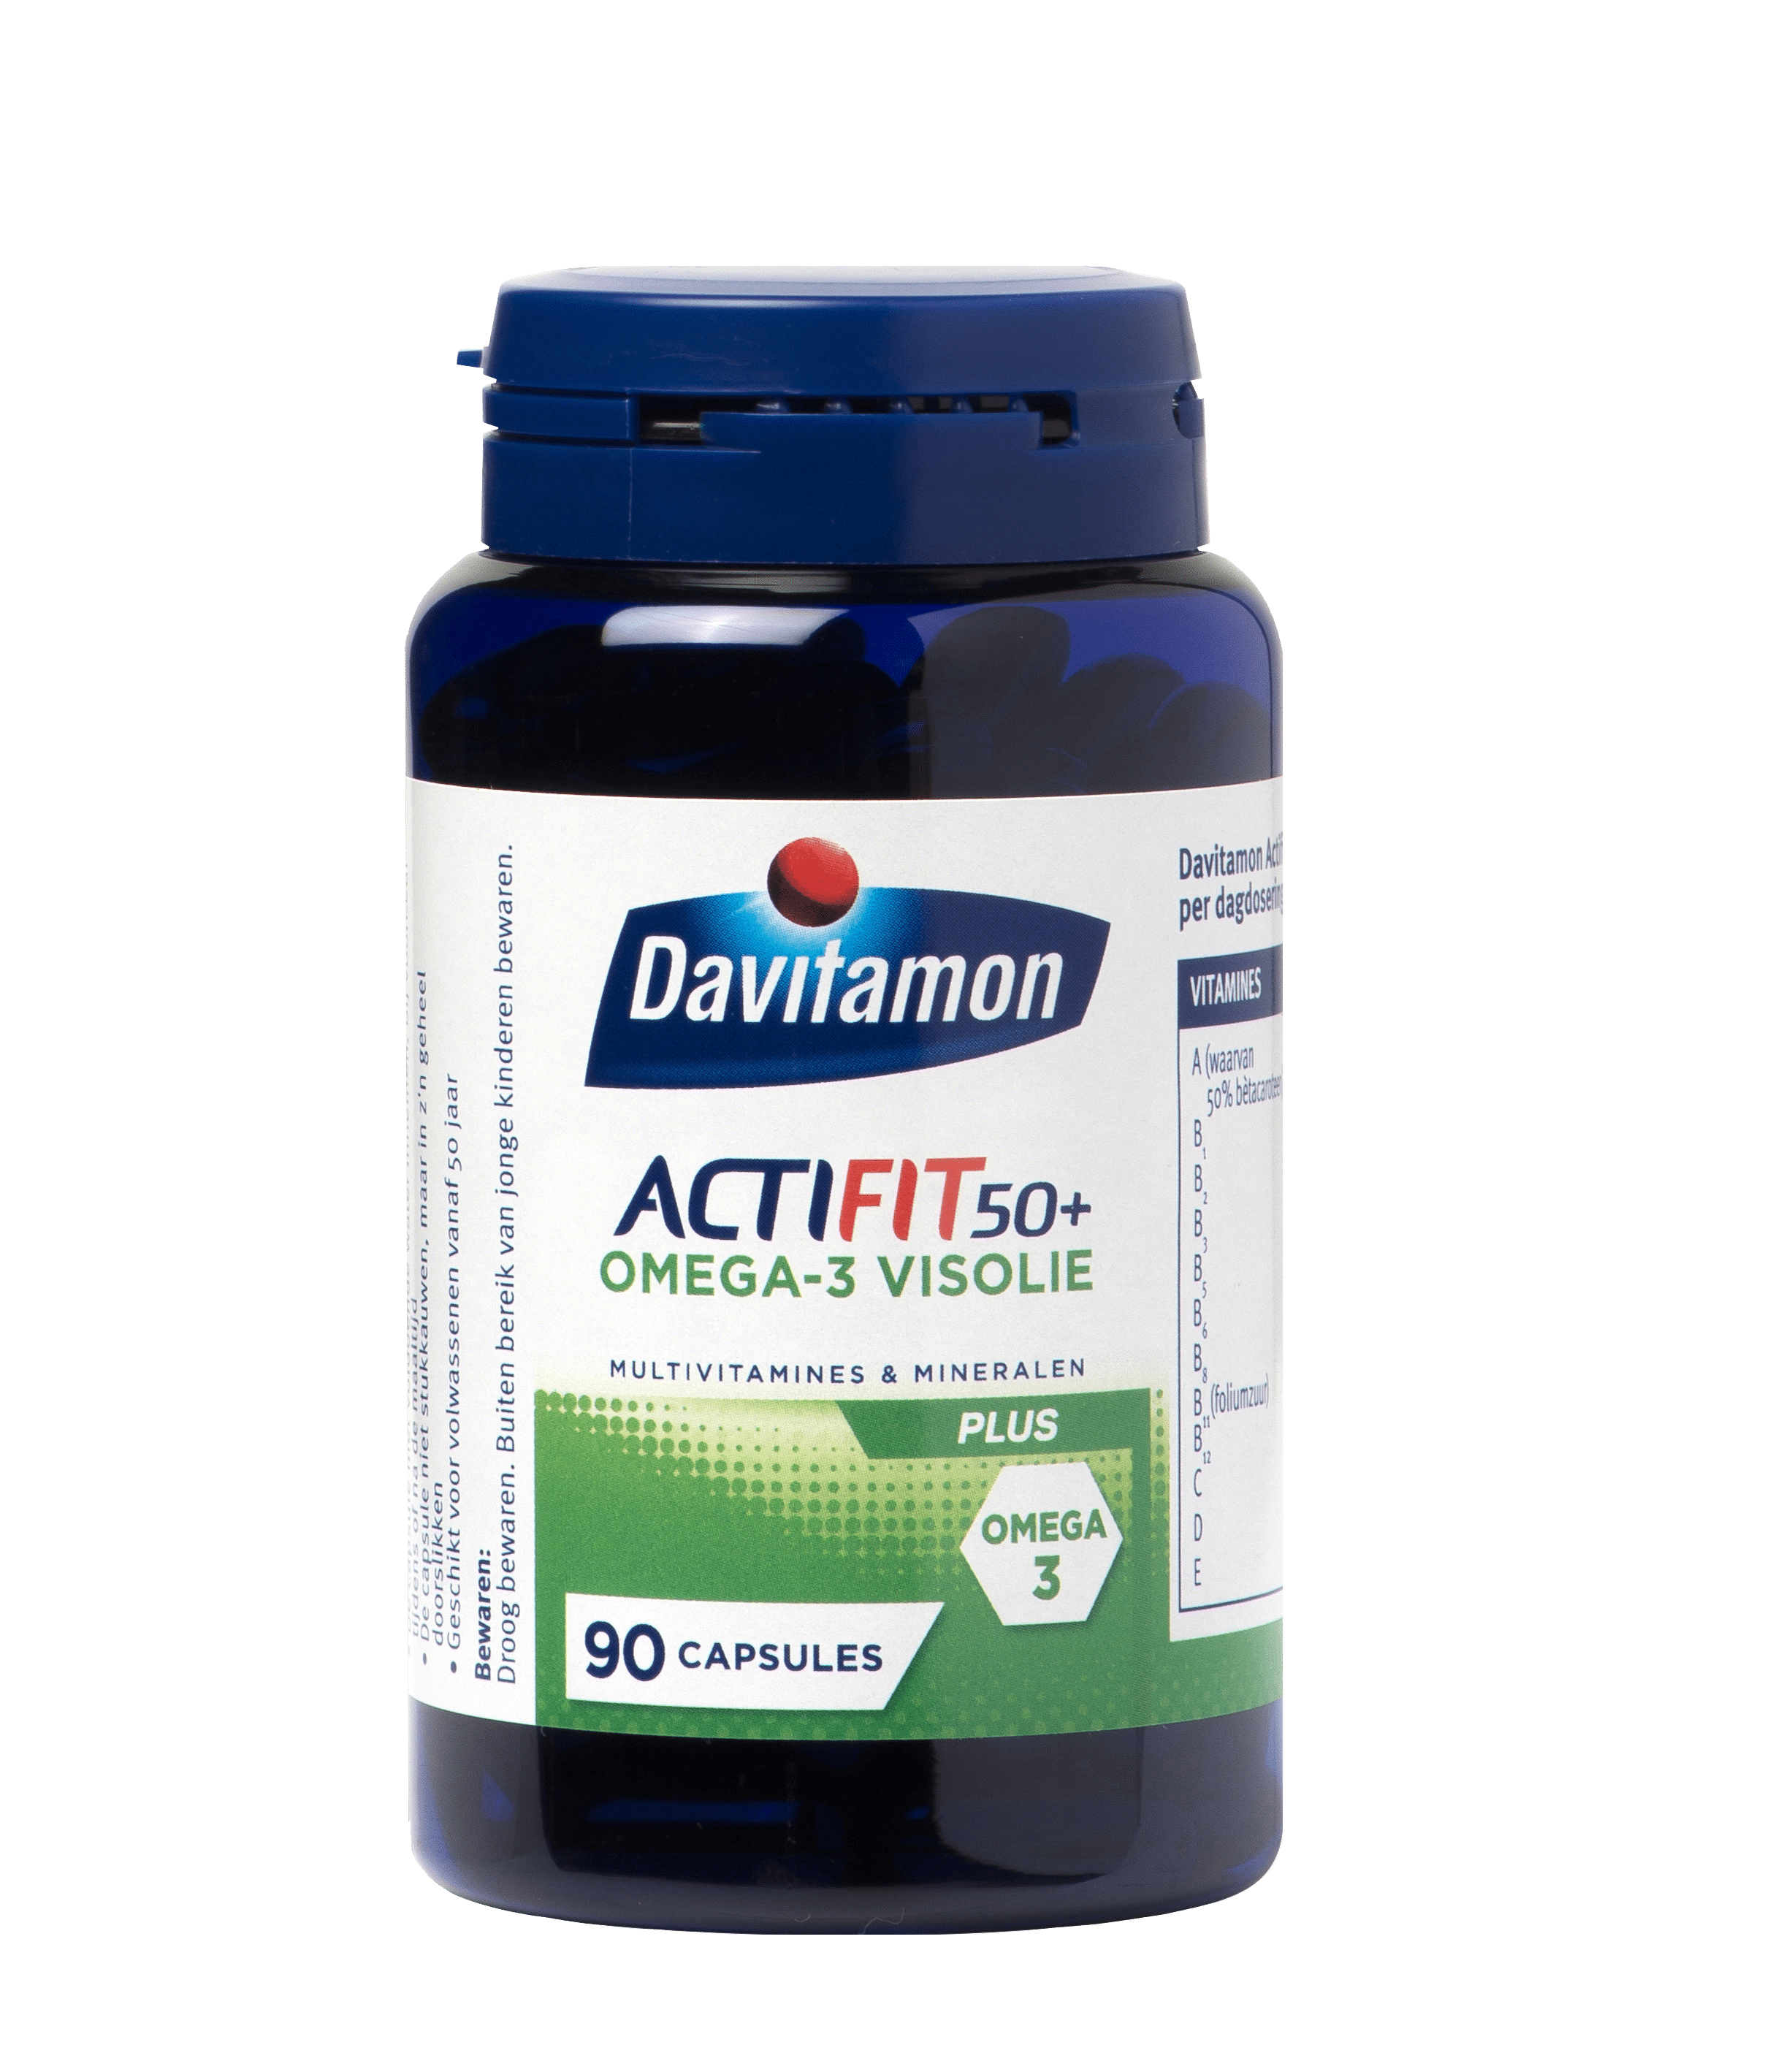 Davitamon ActiFit 50+ Visolie Tabletten Product